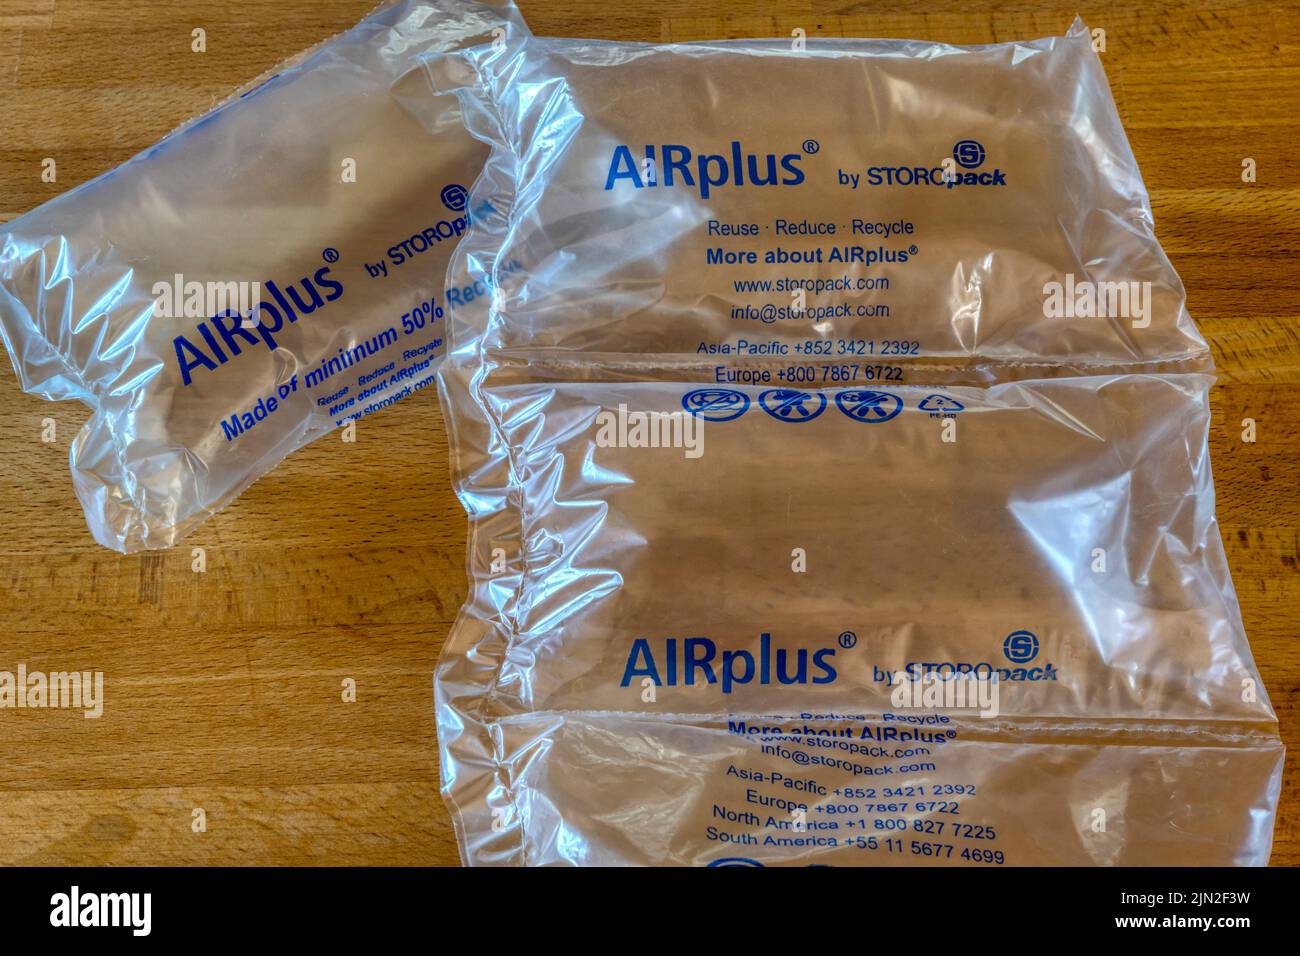 Confezione AirPlus riempita d'aria di STOROpack. In parte in plastica riciclata. Foto Stock